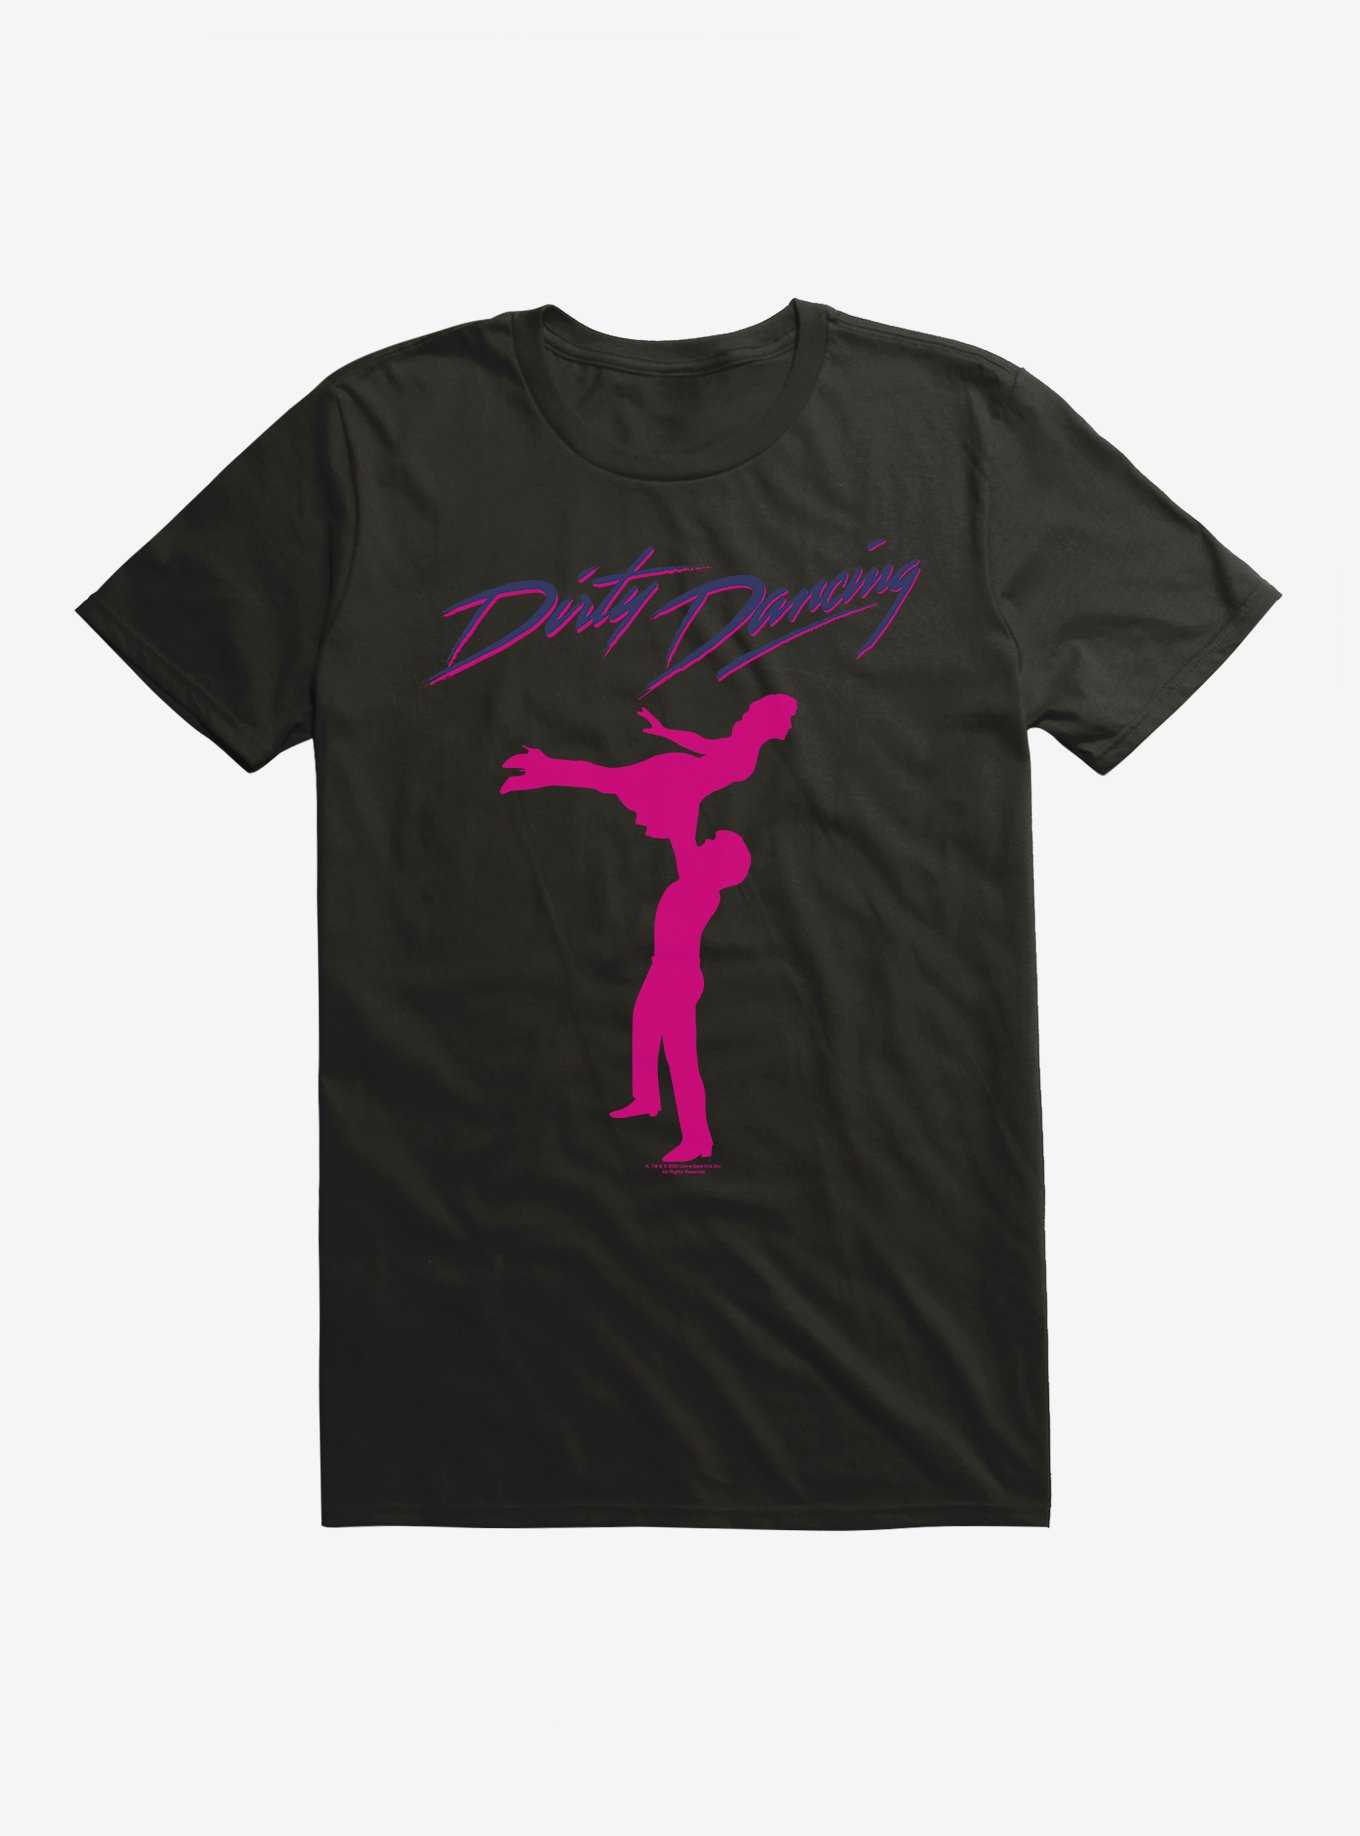 Dirty Dancing Silohouette Lift T-Shirt, , hi-res